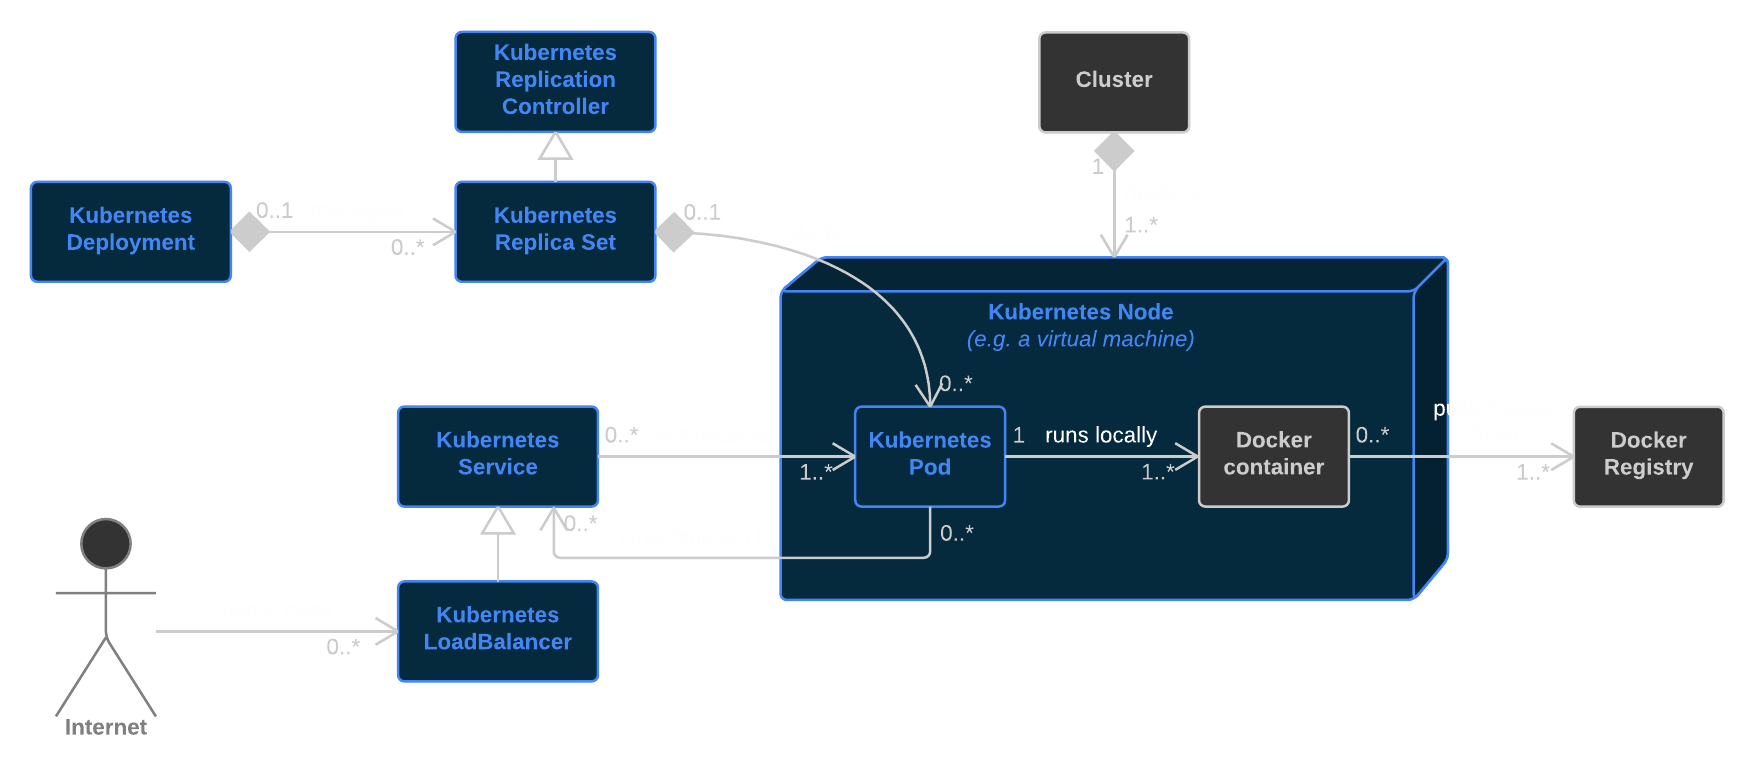 Kubernetes work units overview UML diagram